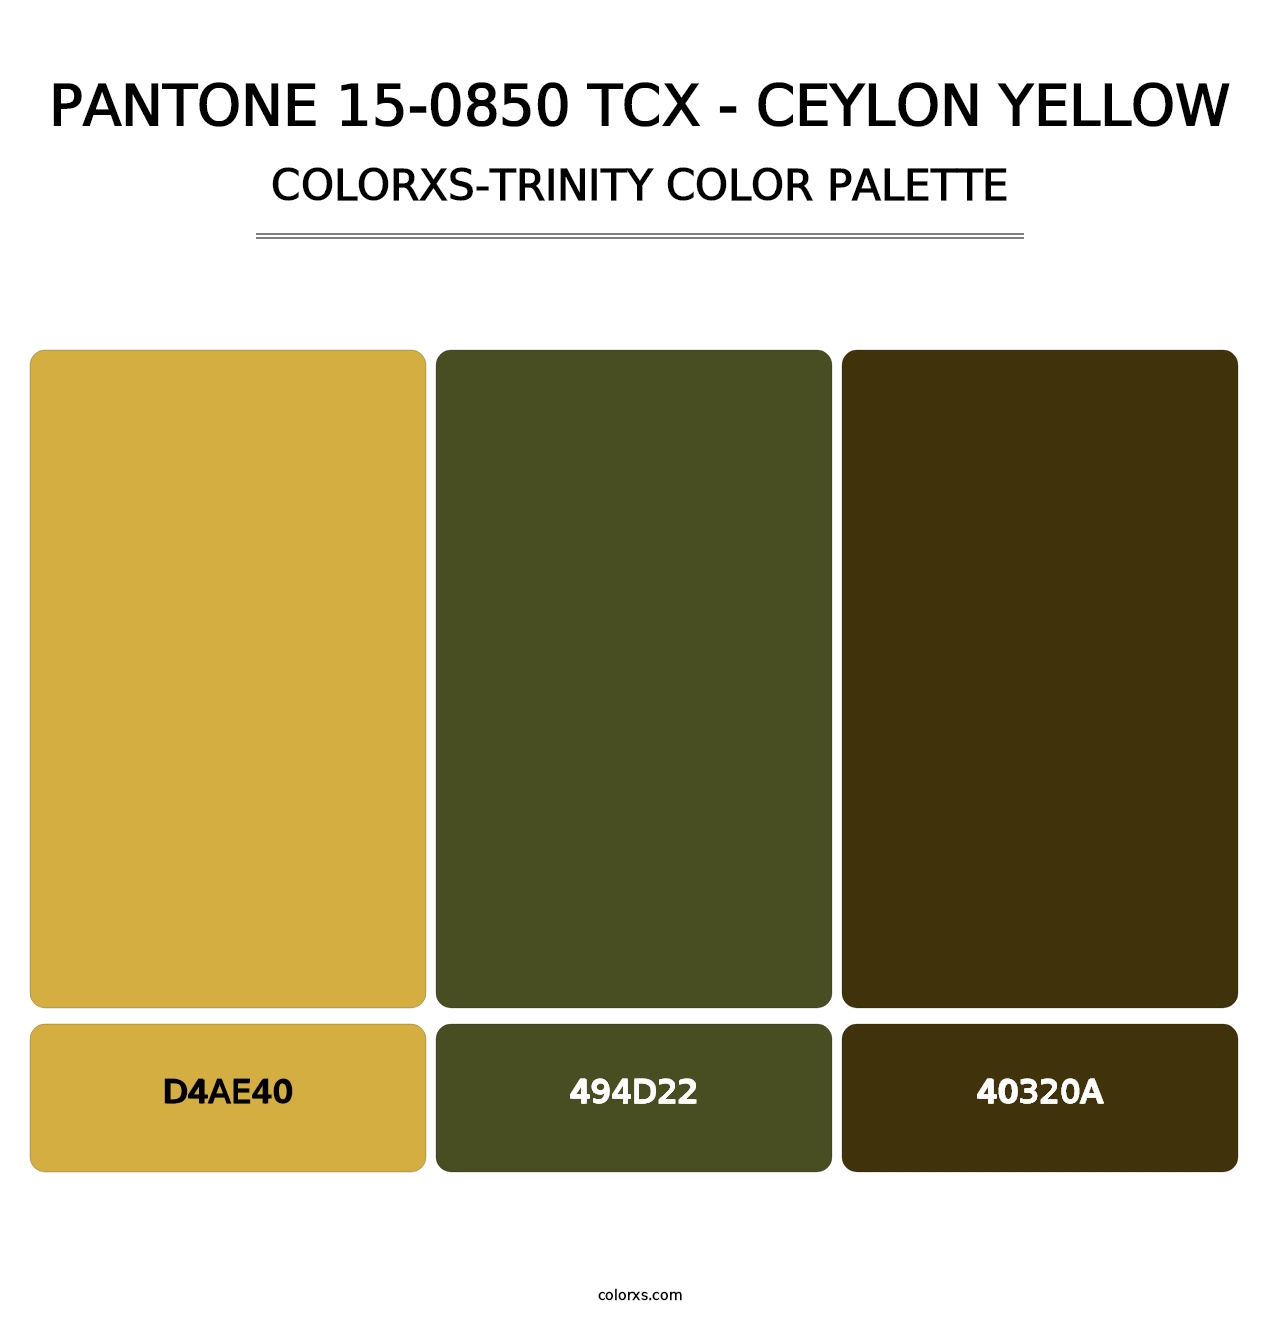 PANTONE 15-0850 TCX - Ceylon Yellow - Colorxs Trinity Palette